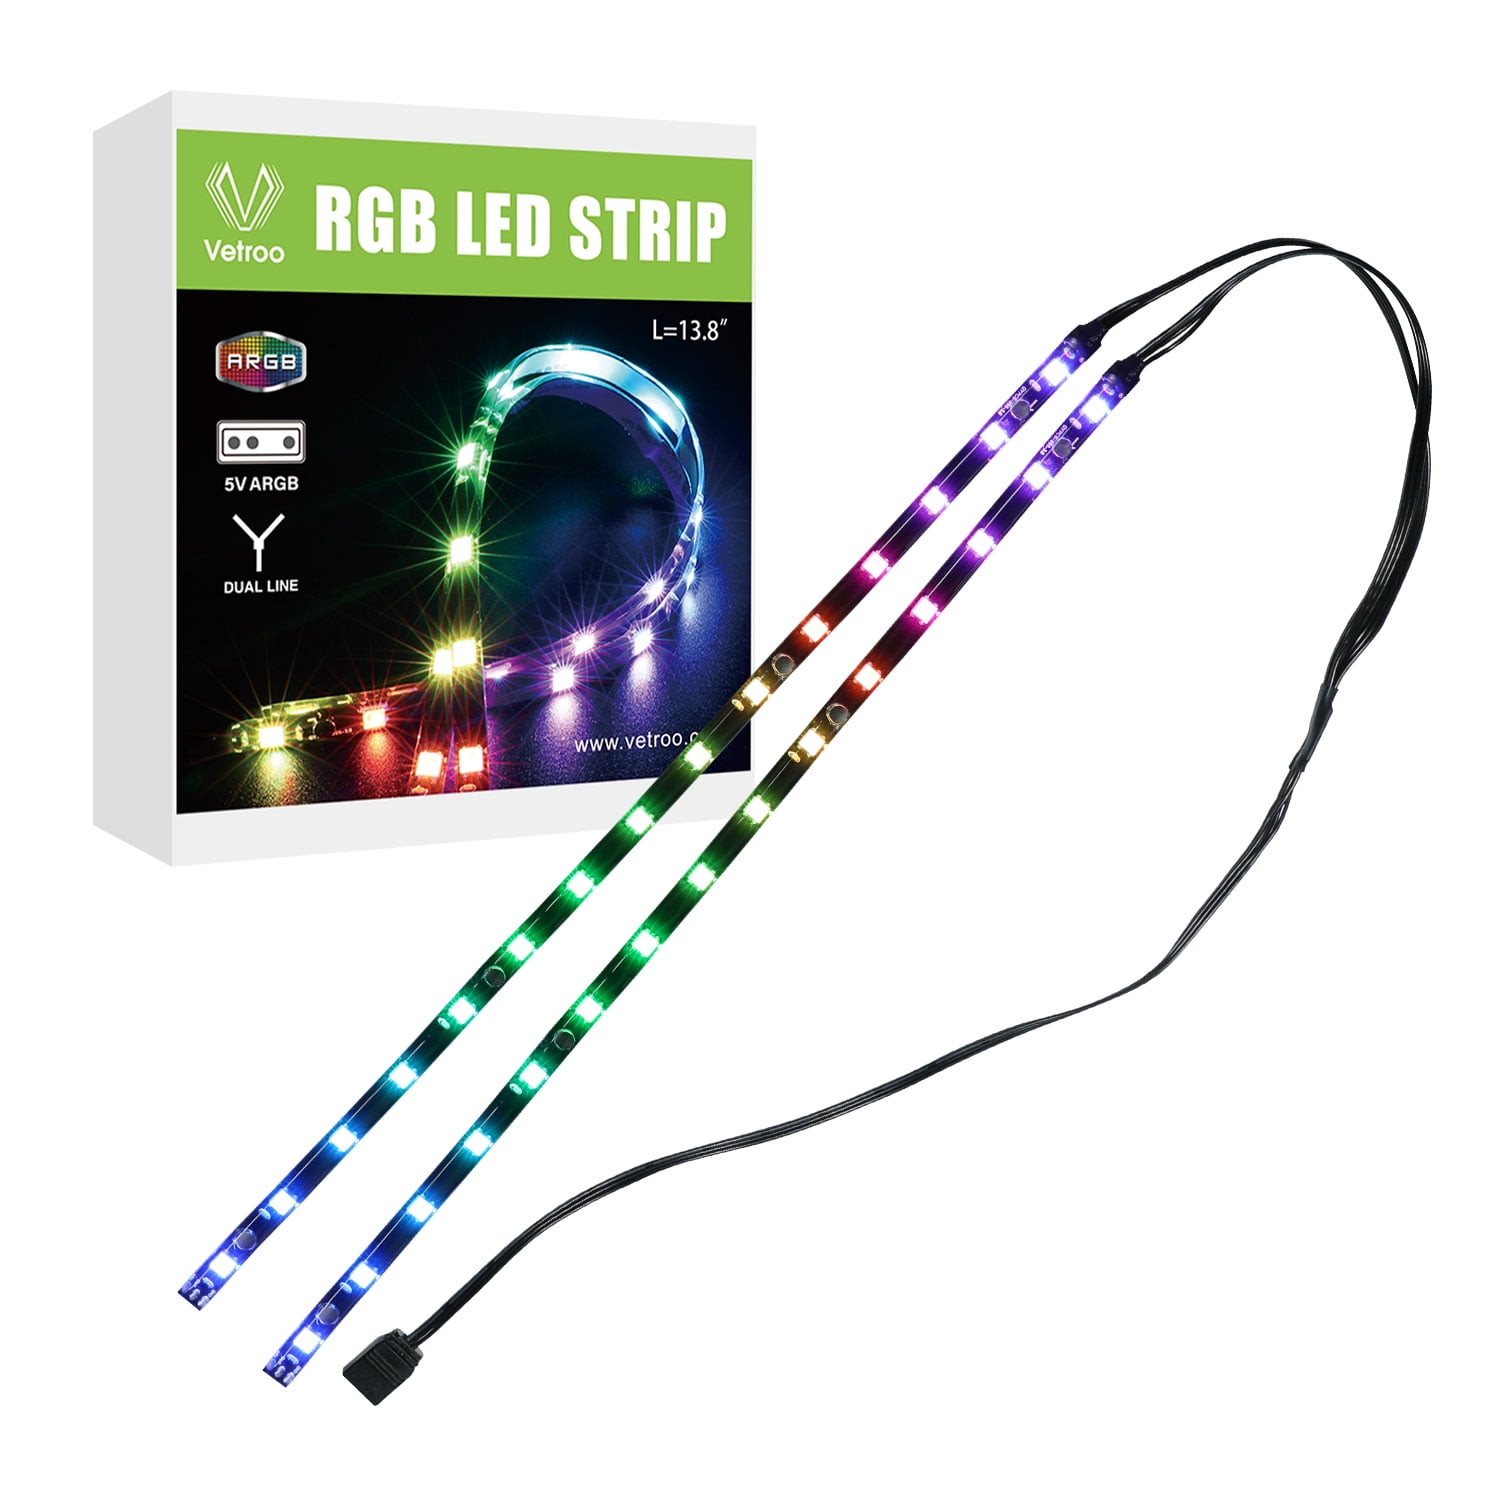 Vetroo LED Light Strip Lights 15LEDs for Modding PC Case M/B with 3pin 5V RGB Header Compatible with Asus Aura, Asrock RGB Led, Gigabyte RGB Fusion, MSI Mystic Light (Single) -